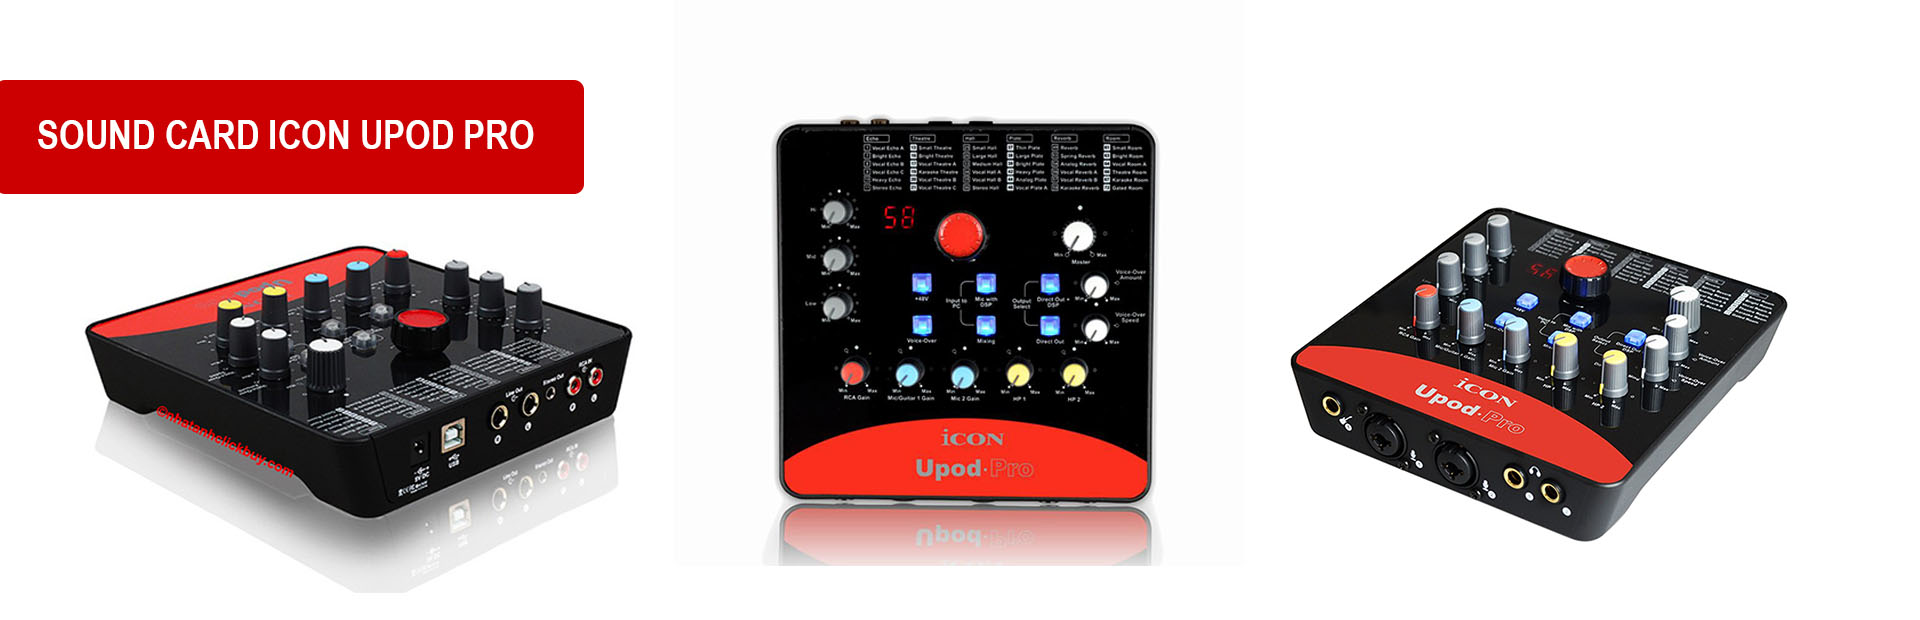 Sound card Icon Upod Pro trong combo thu âm livestream AKG P120